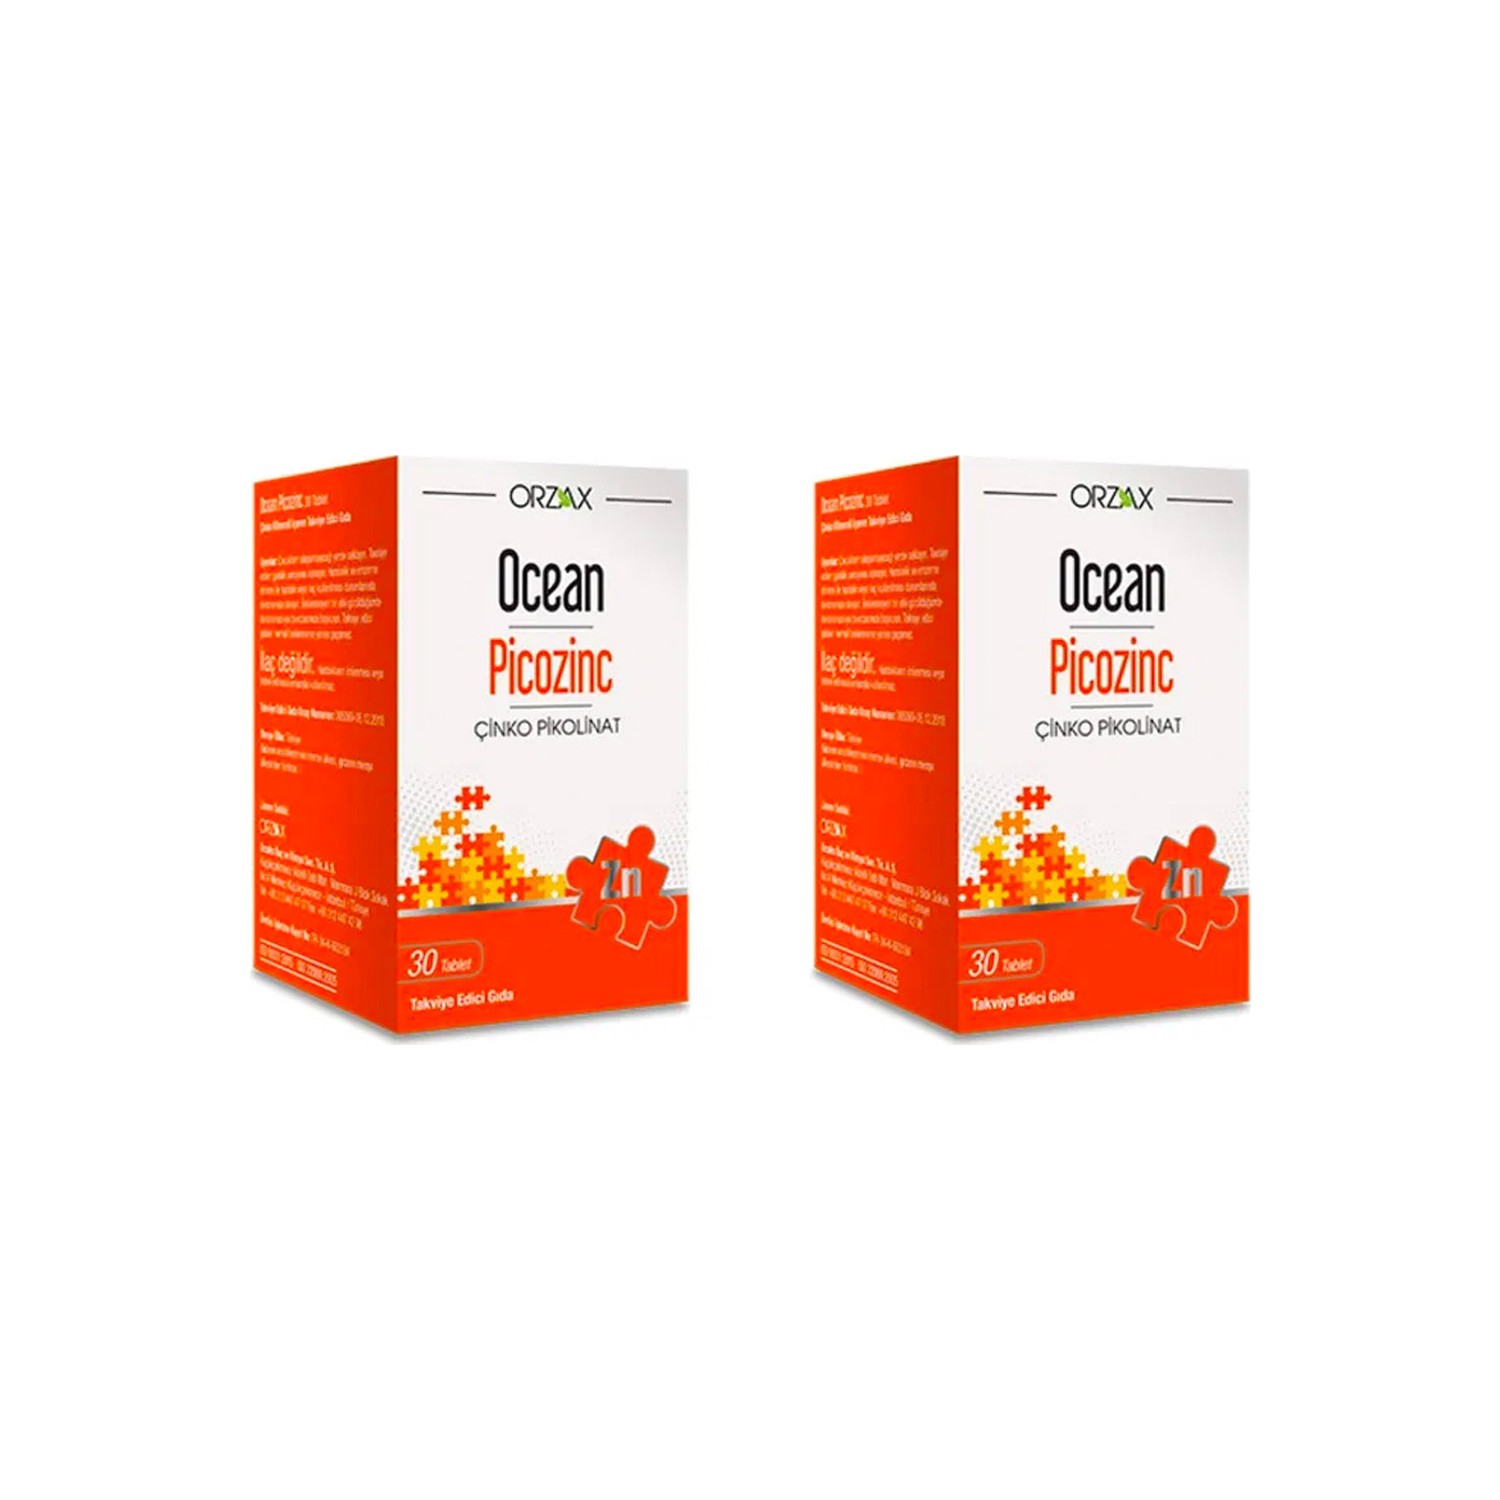 Пищевая добавка Orzax Ocean Picozinc Cinko Picolinate, 2 упаковки по 30 таблеток цена и фото